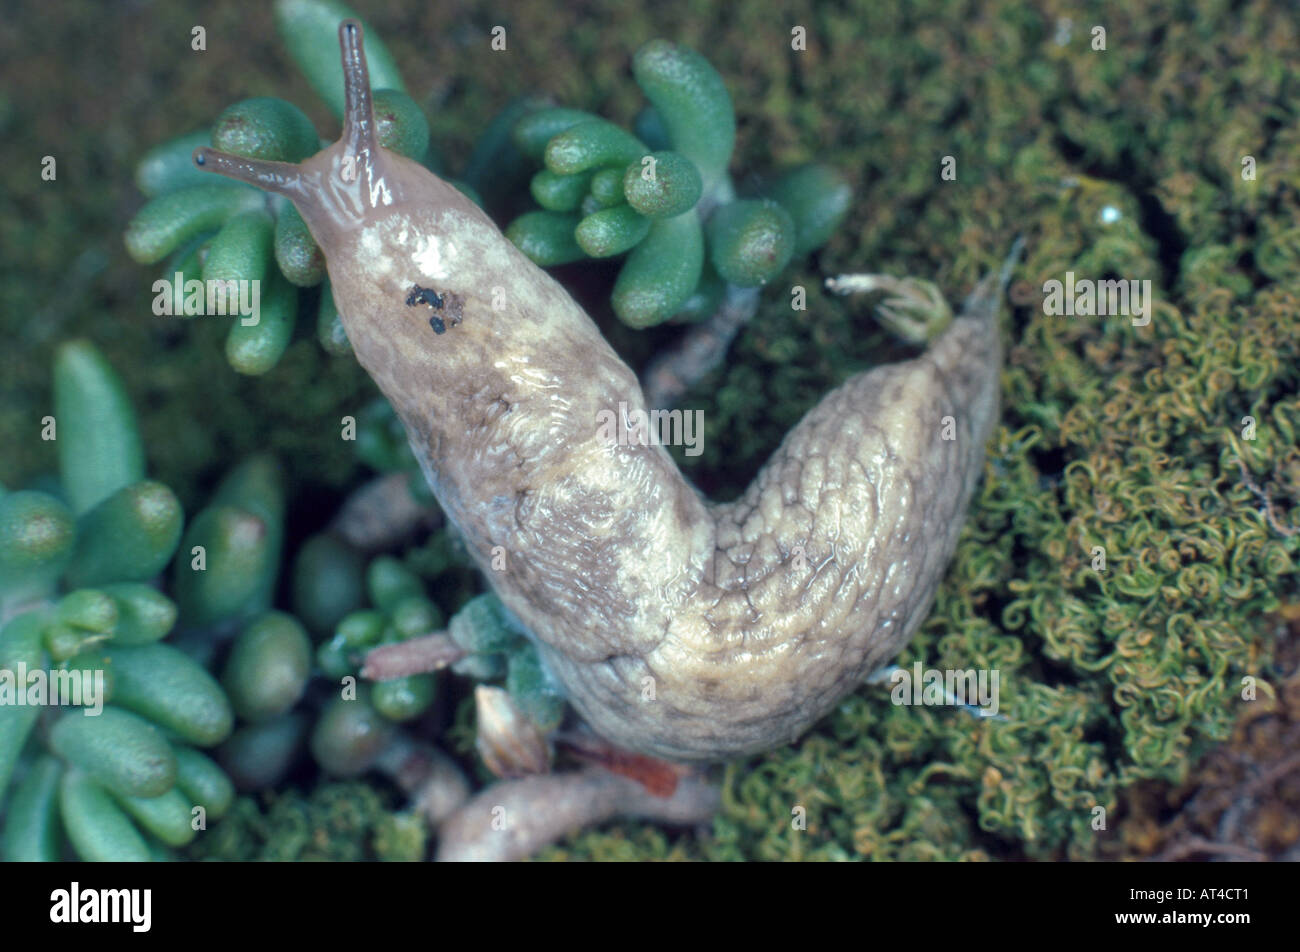 netted slug, gray fieldslug, grey field slug, milky slug (Deroceras reticulatum, Agriolimax reticulatus) Stock Photo